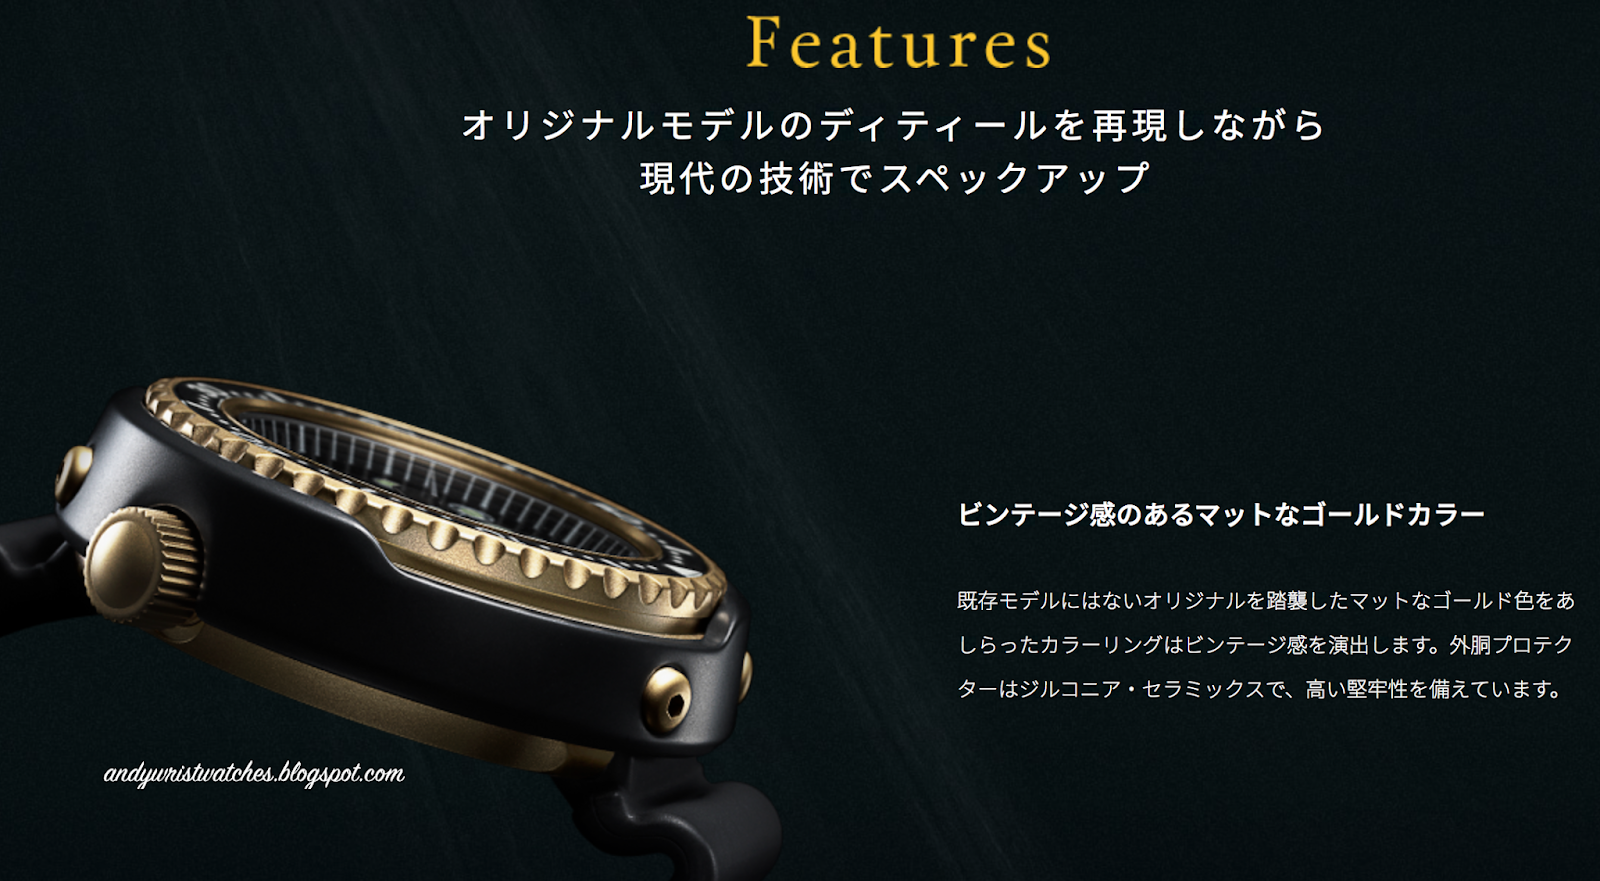 C-segment Wrist Watches: Seiko Tuna SBBN040 : 1978 Golden Tuna Re-issue